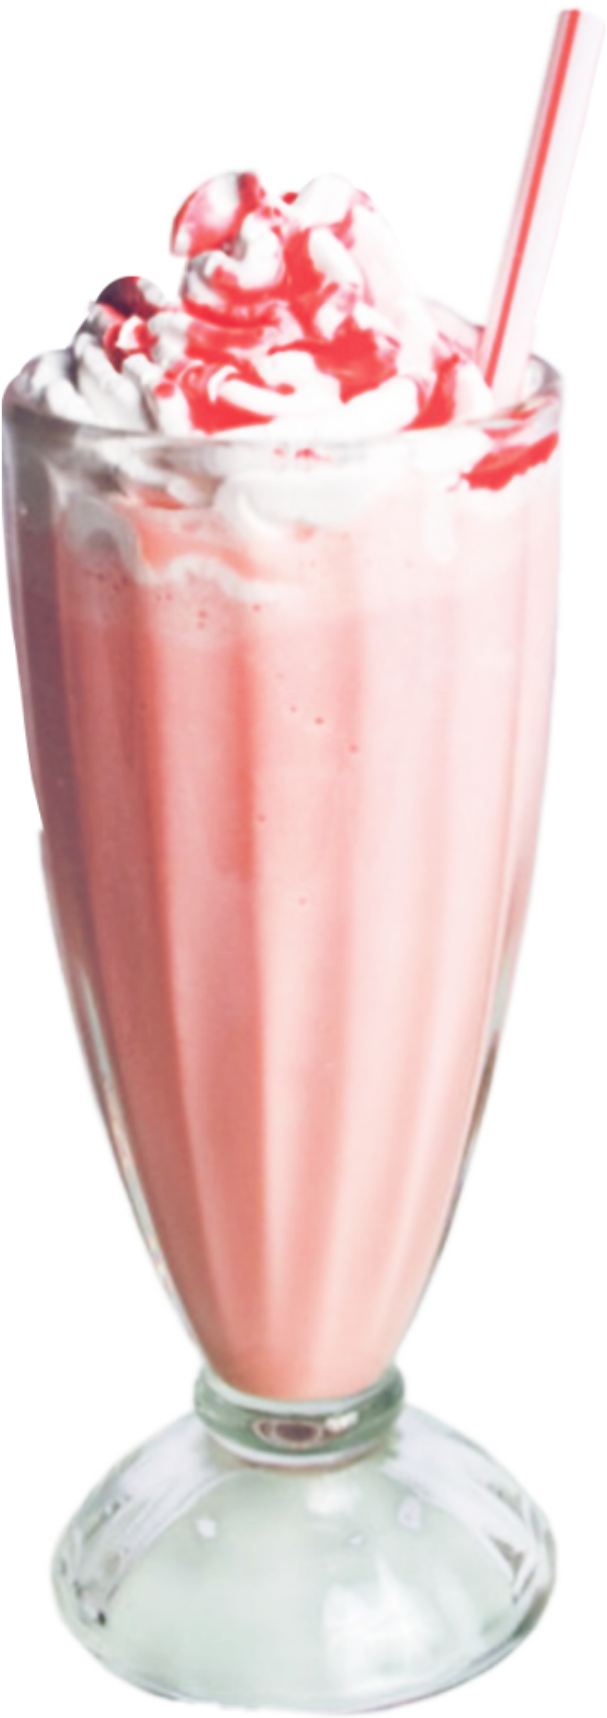 A Close Up Of A Pink Milkshake